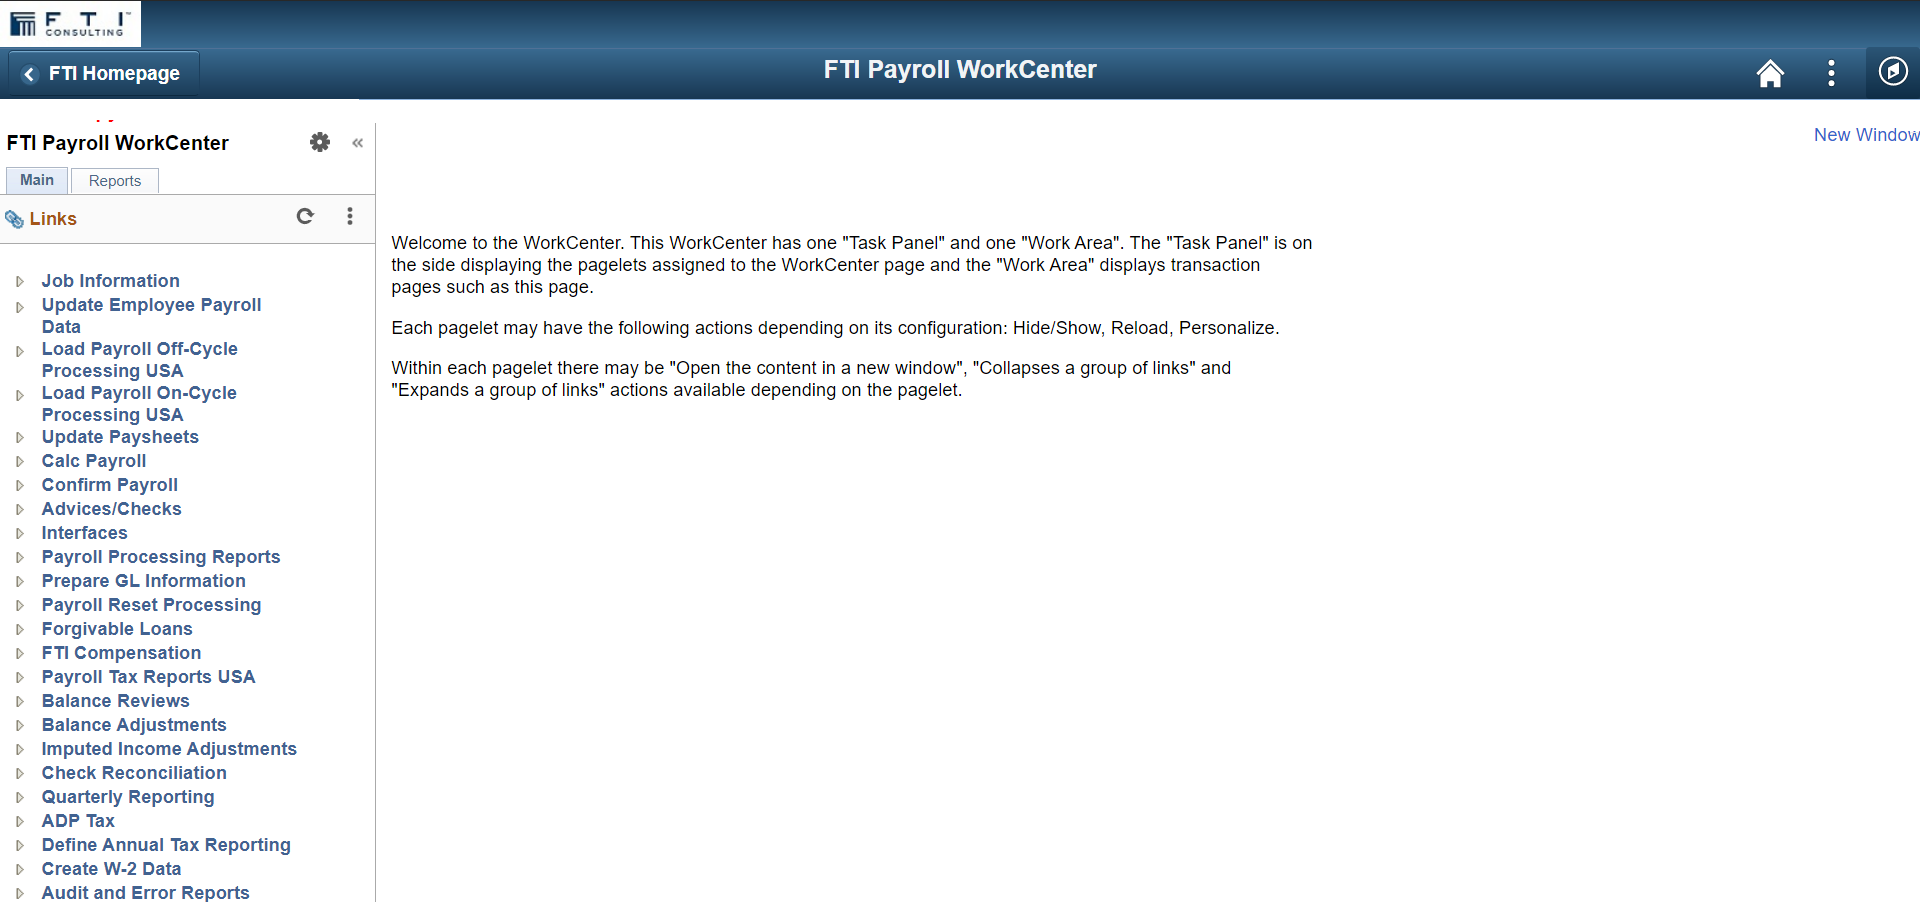 FTI Payroll WorkCenter